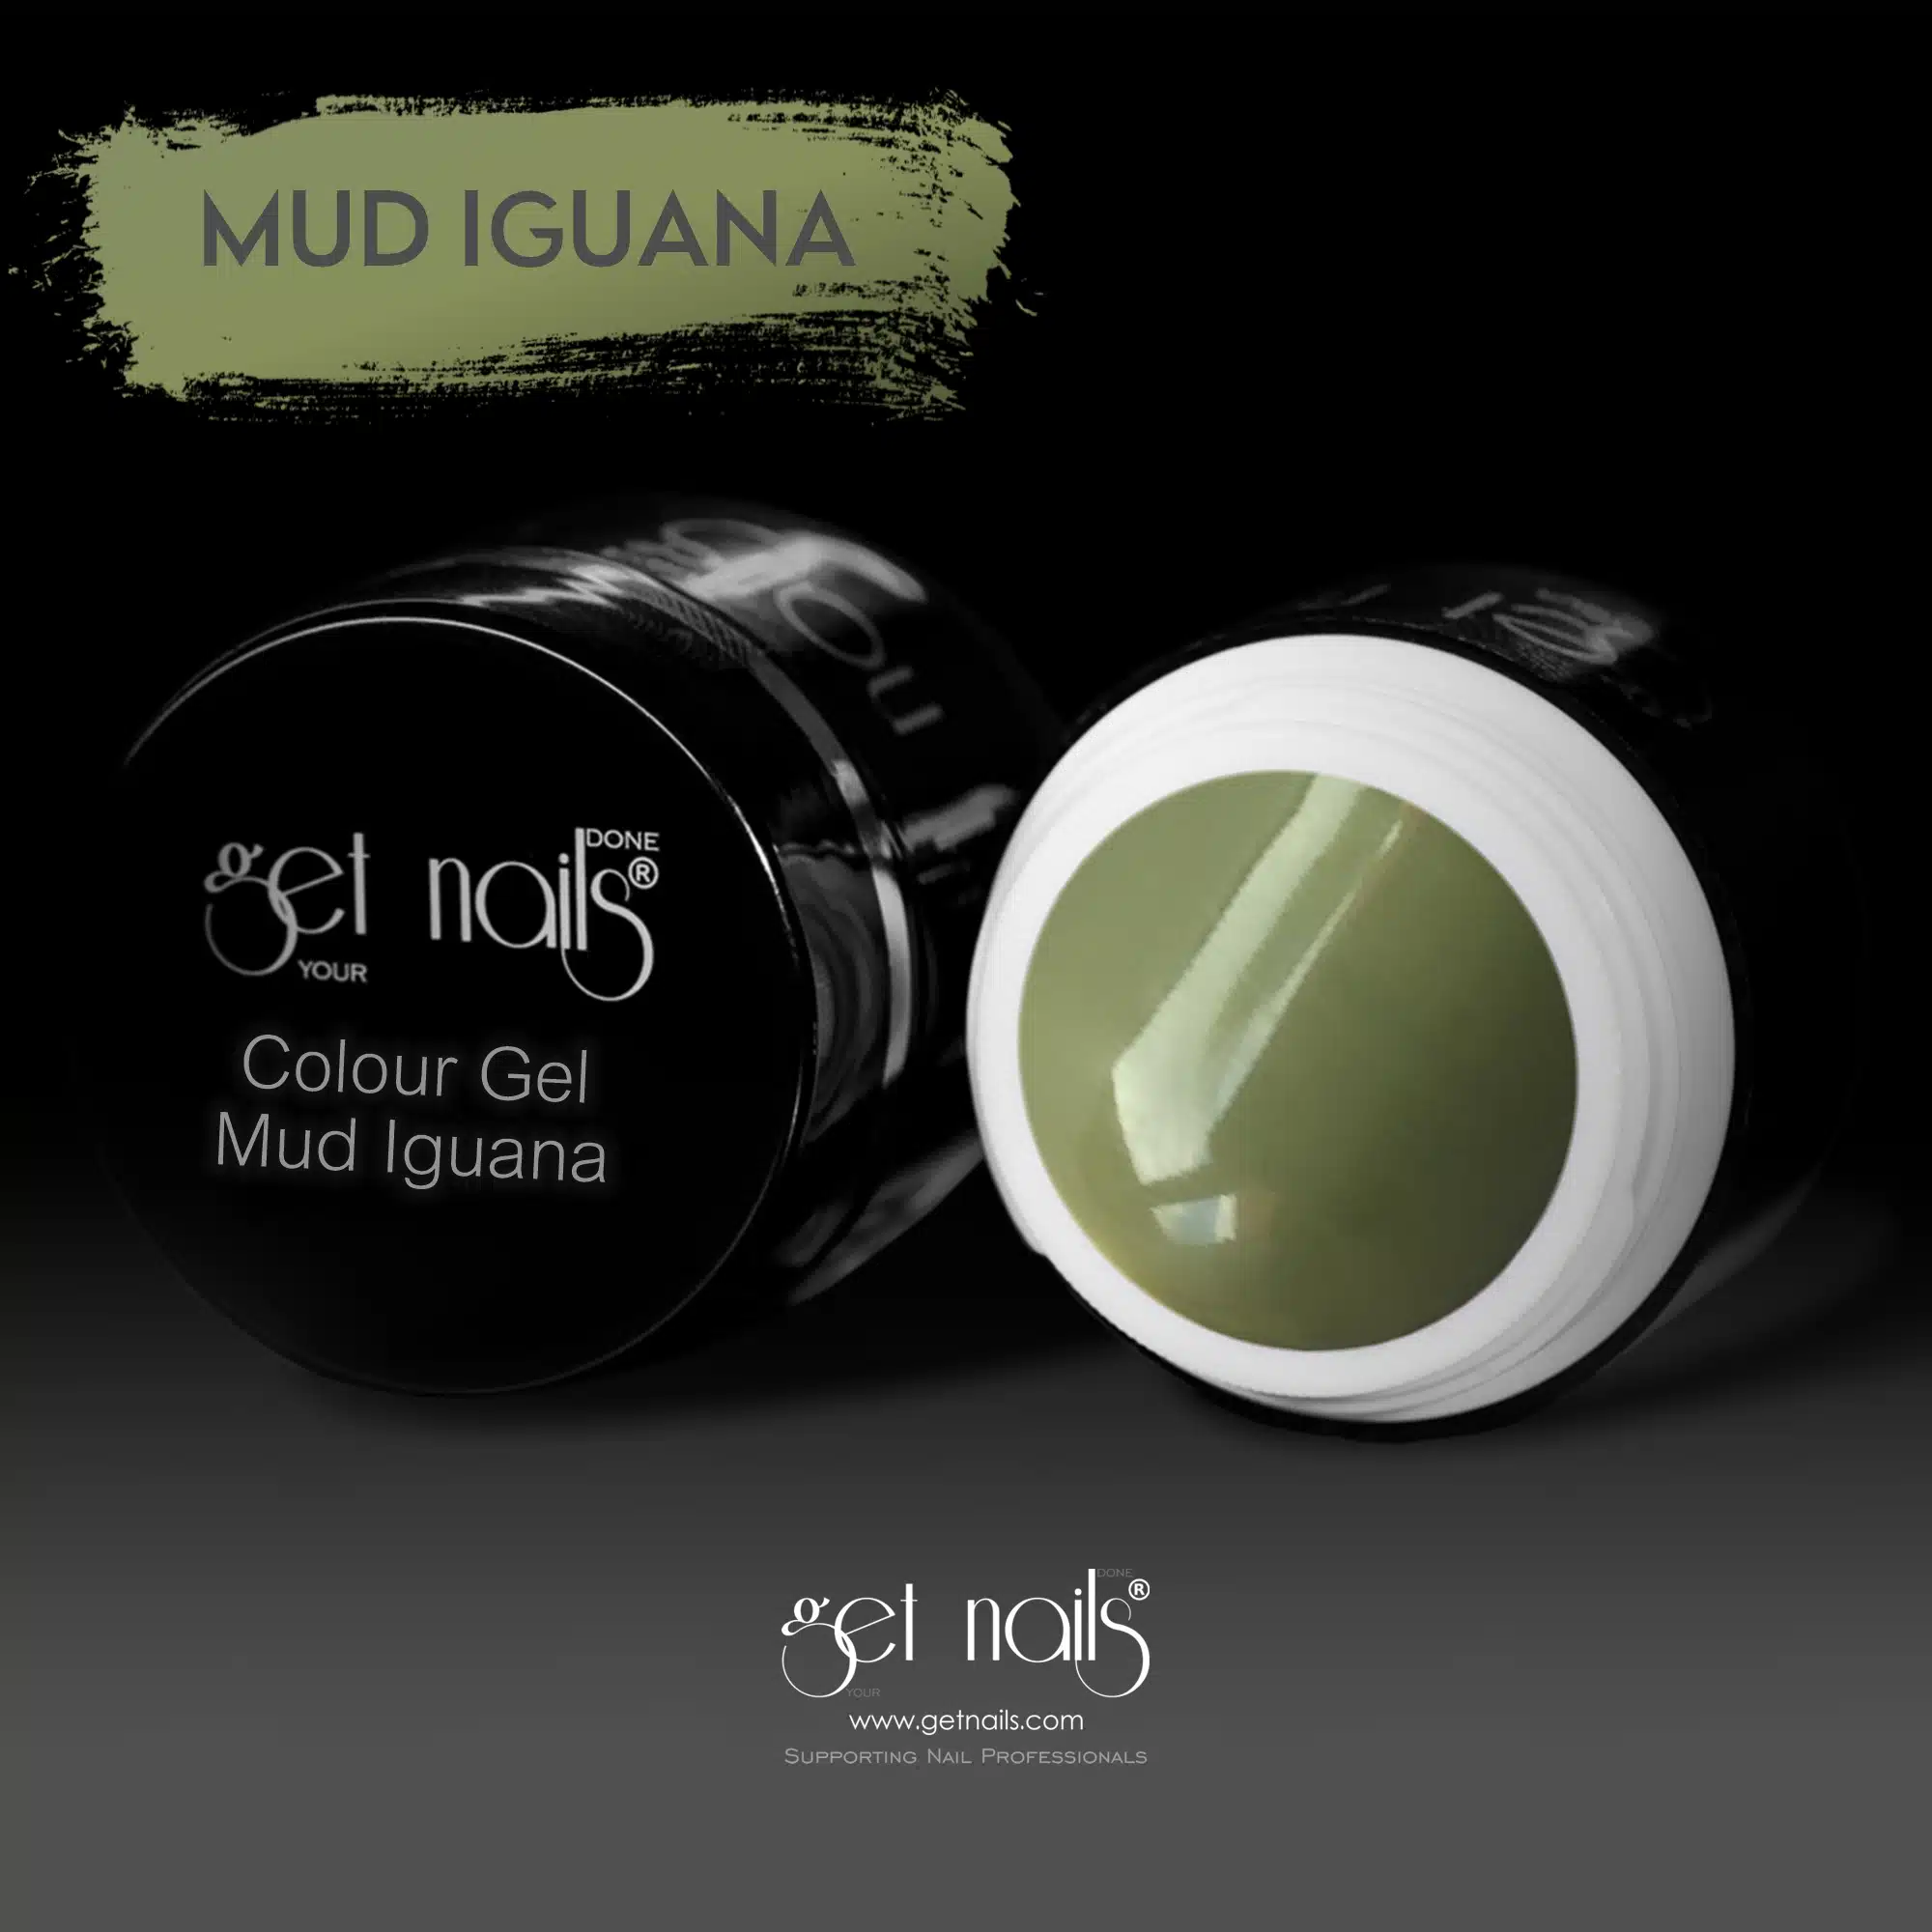 Get Nails Austria - Color Gel Mud Iguana 5g